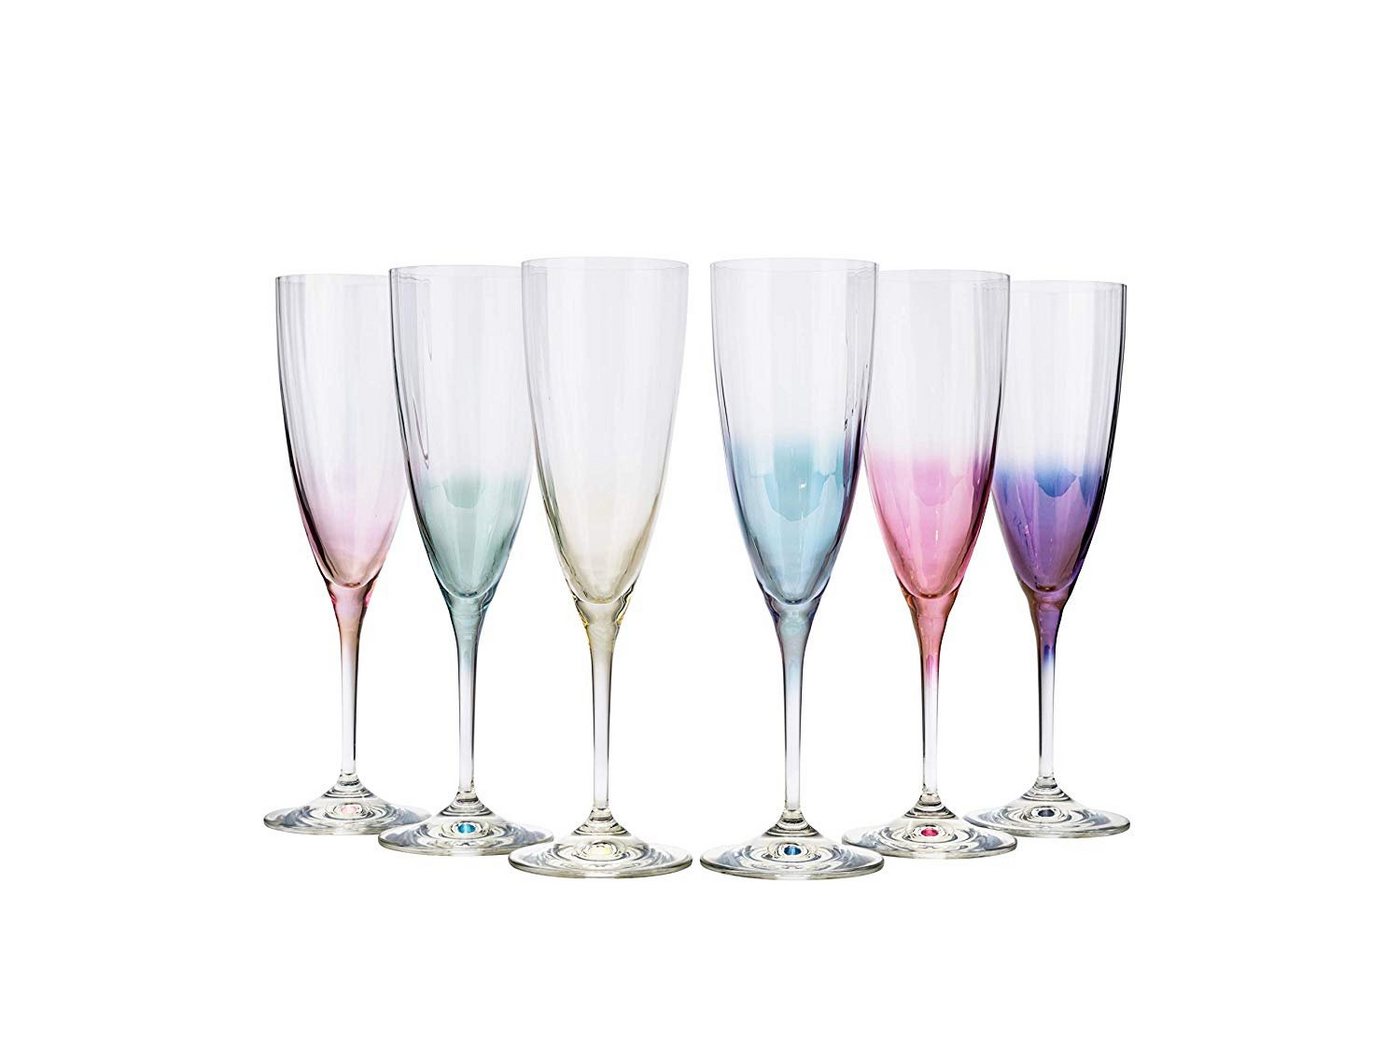 Crystalex Sektglas Kate Optic Sektgläser 220 ml 6er Set, Kristallglas, mehrfarbig, Kristallglas, besonderer Glanz von Crystalex